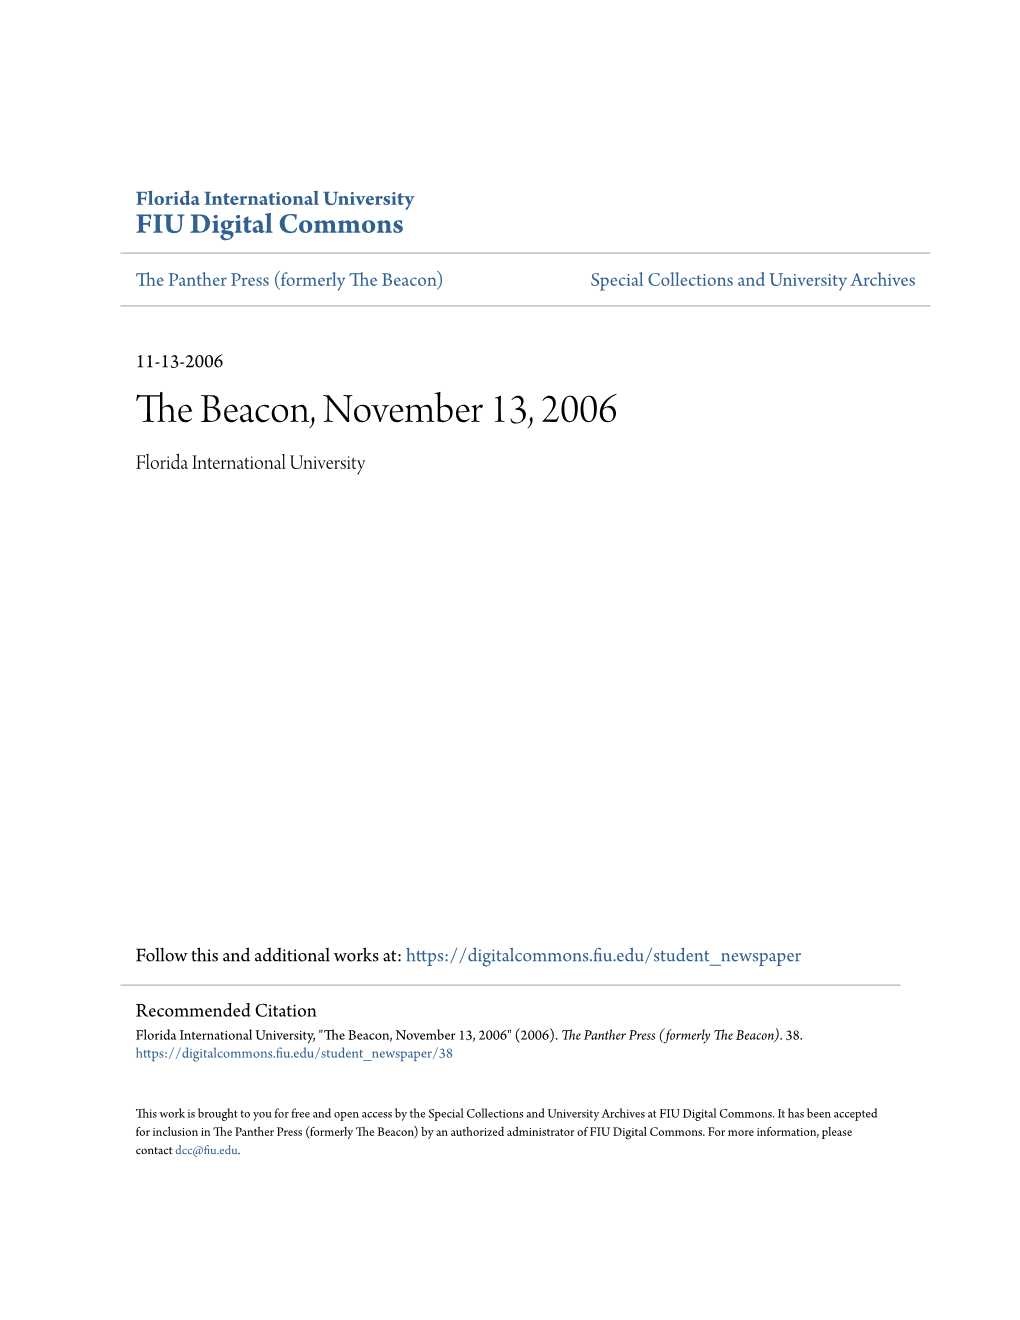 The Beacon, November 13, 2006 Florida International University